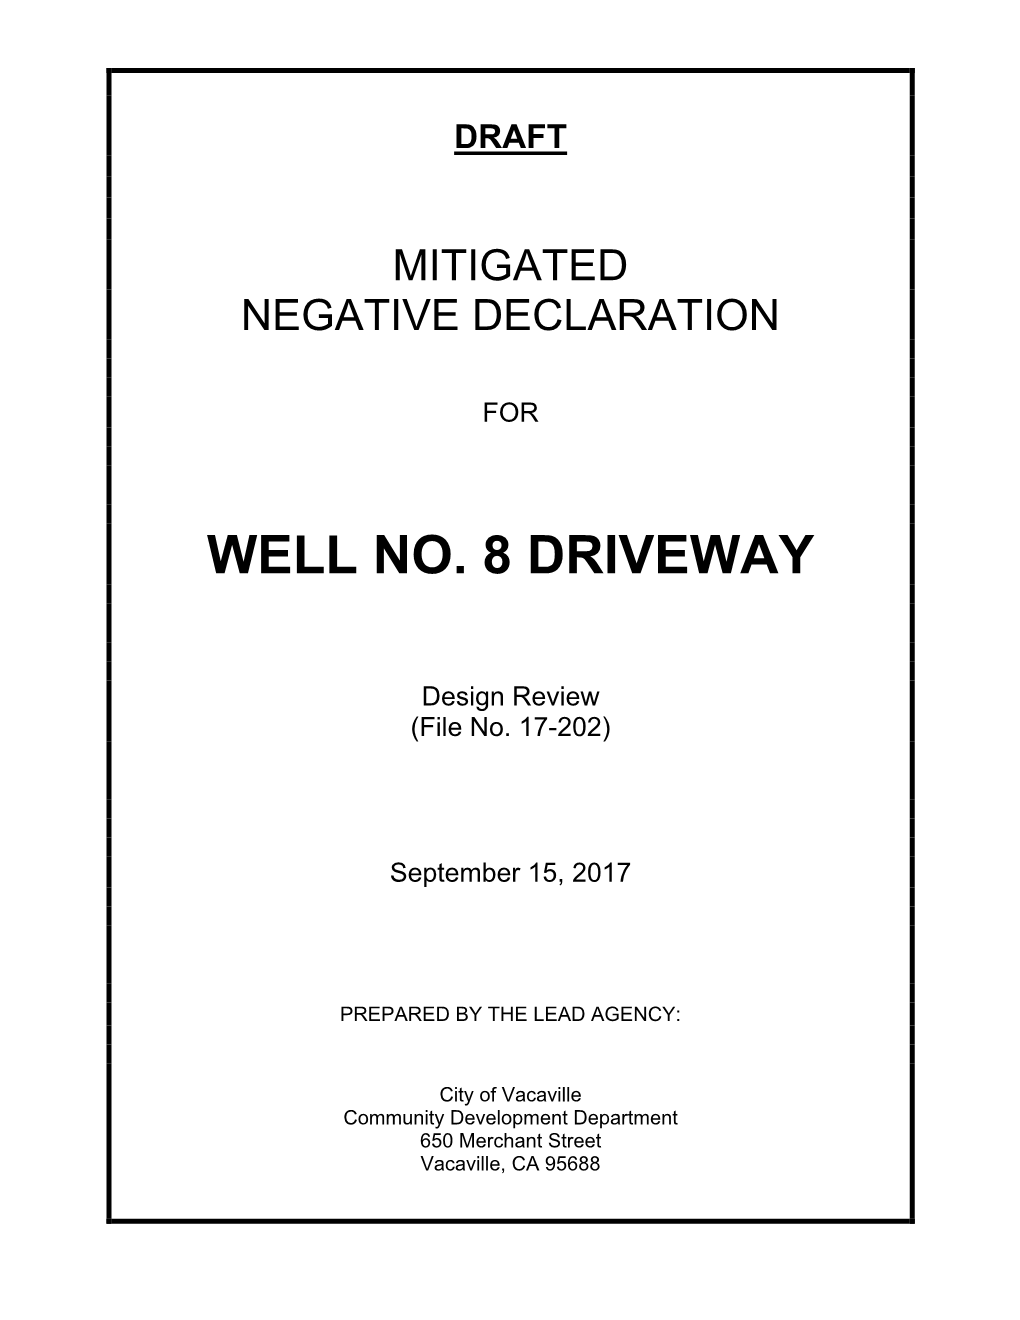 Well No. 8 Driveway Draft